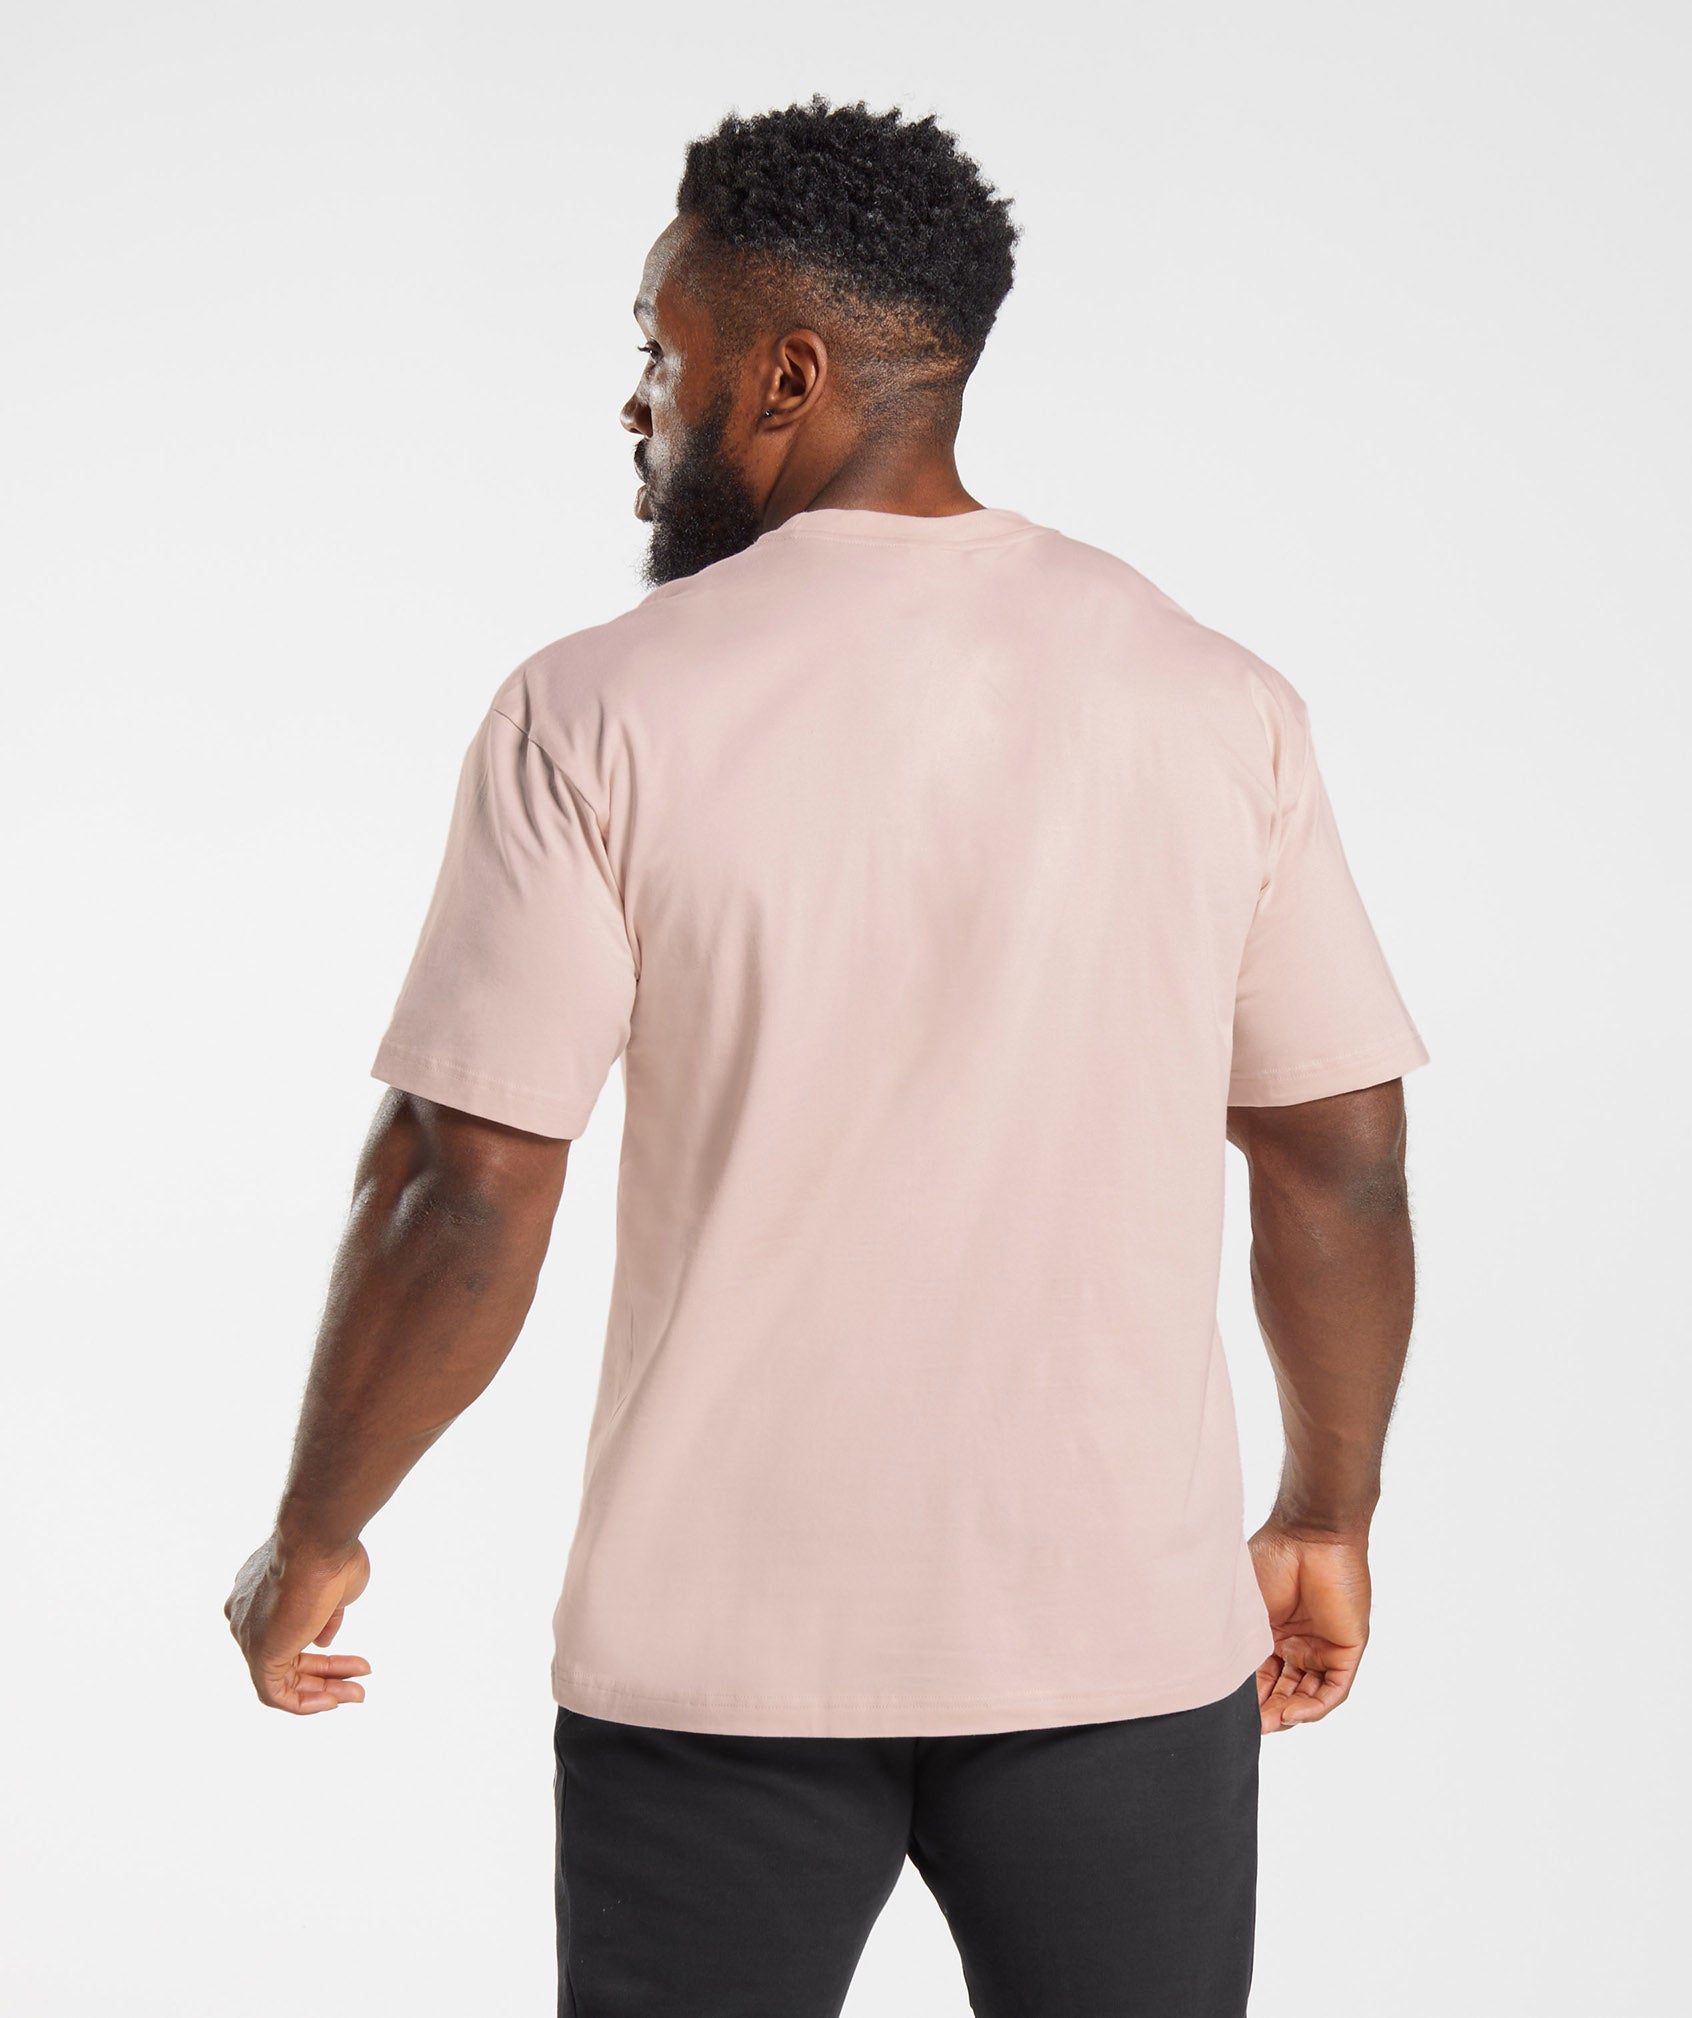 Gymshark Apollo Oversized T-Shirt - Plum Pink